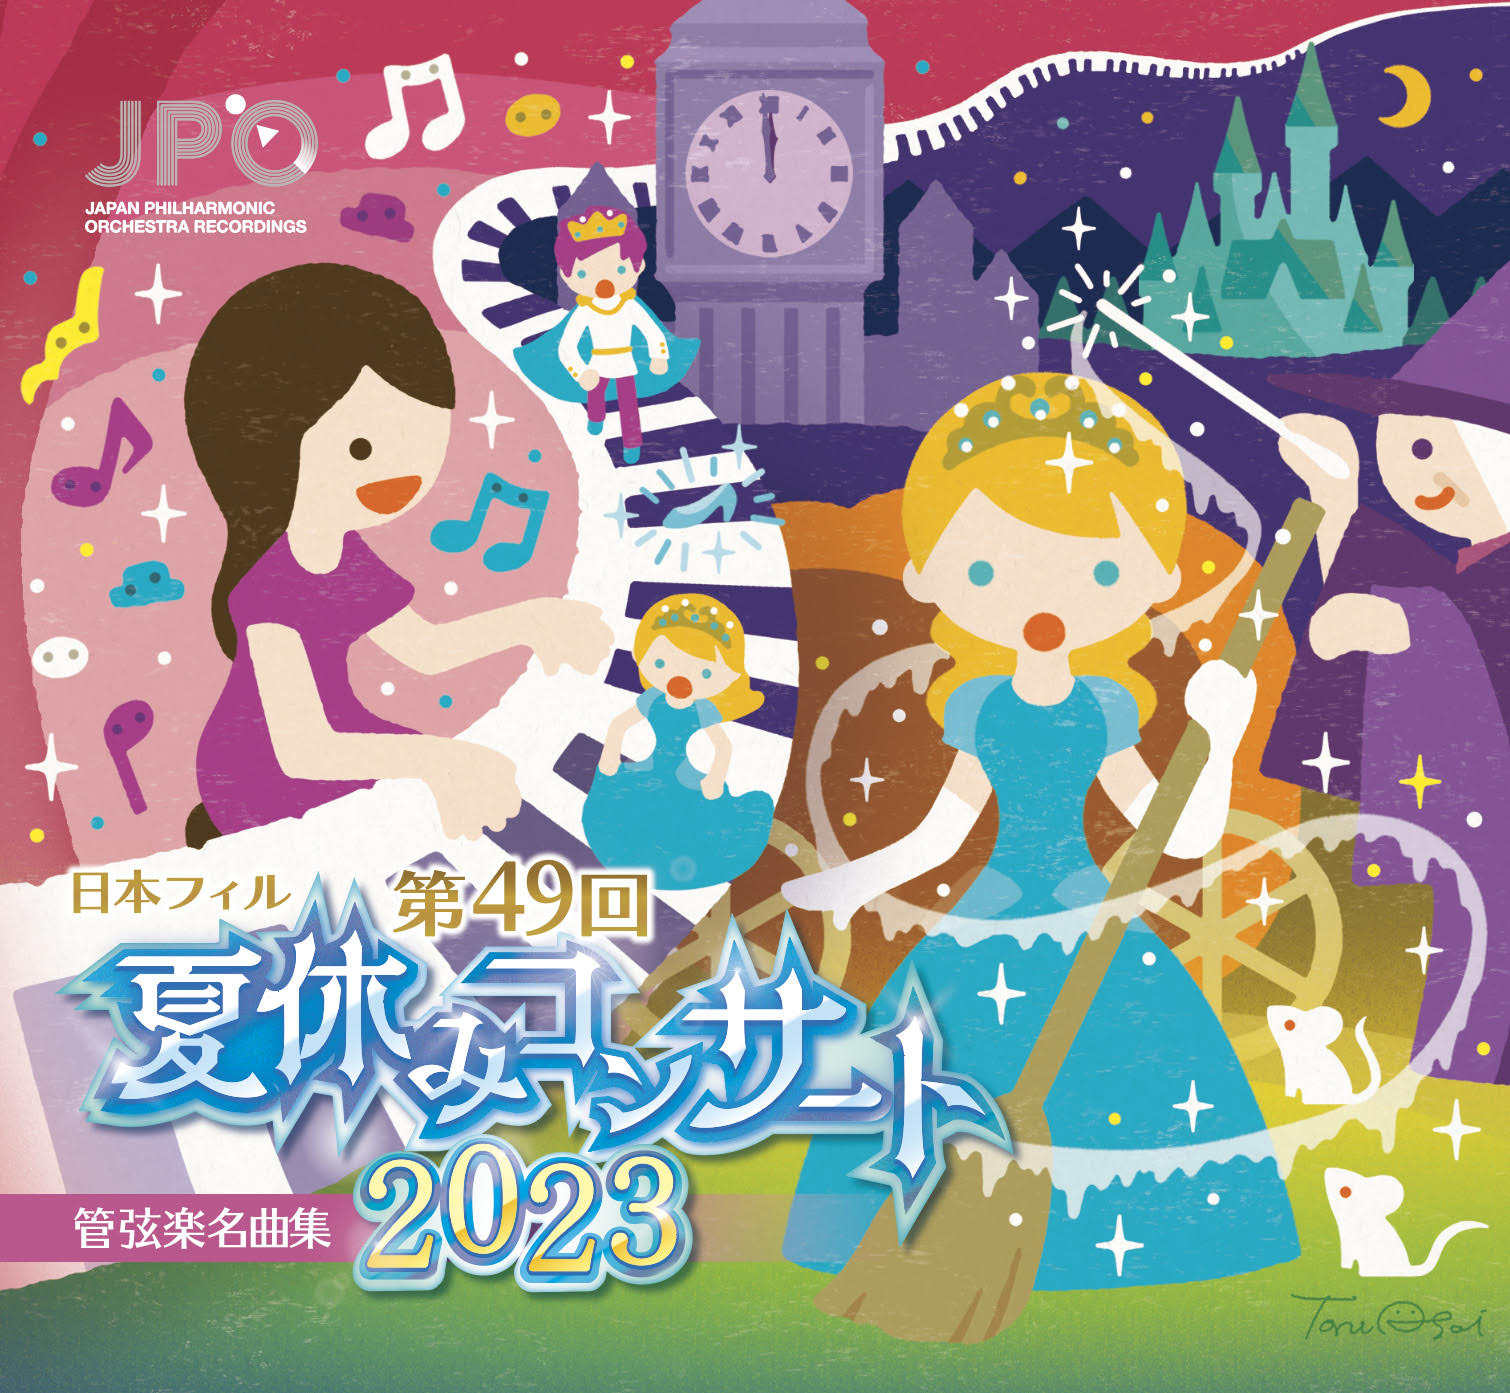 CD/DVD/JPO RECORDINGS 日本フィルハーモニー交響楽団